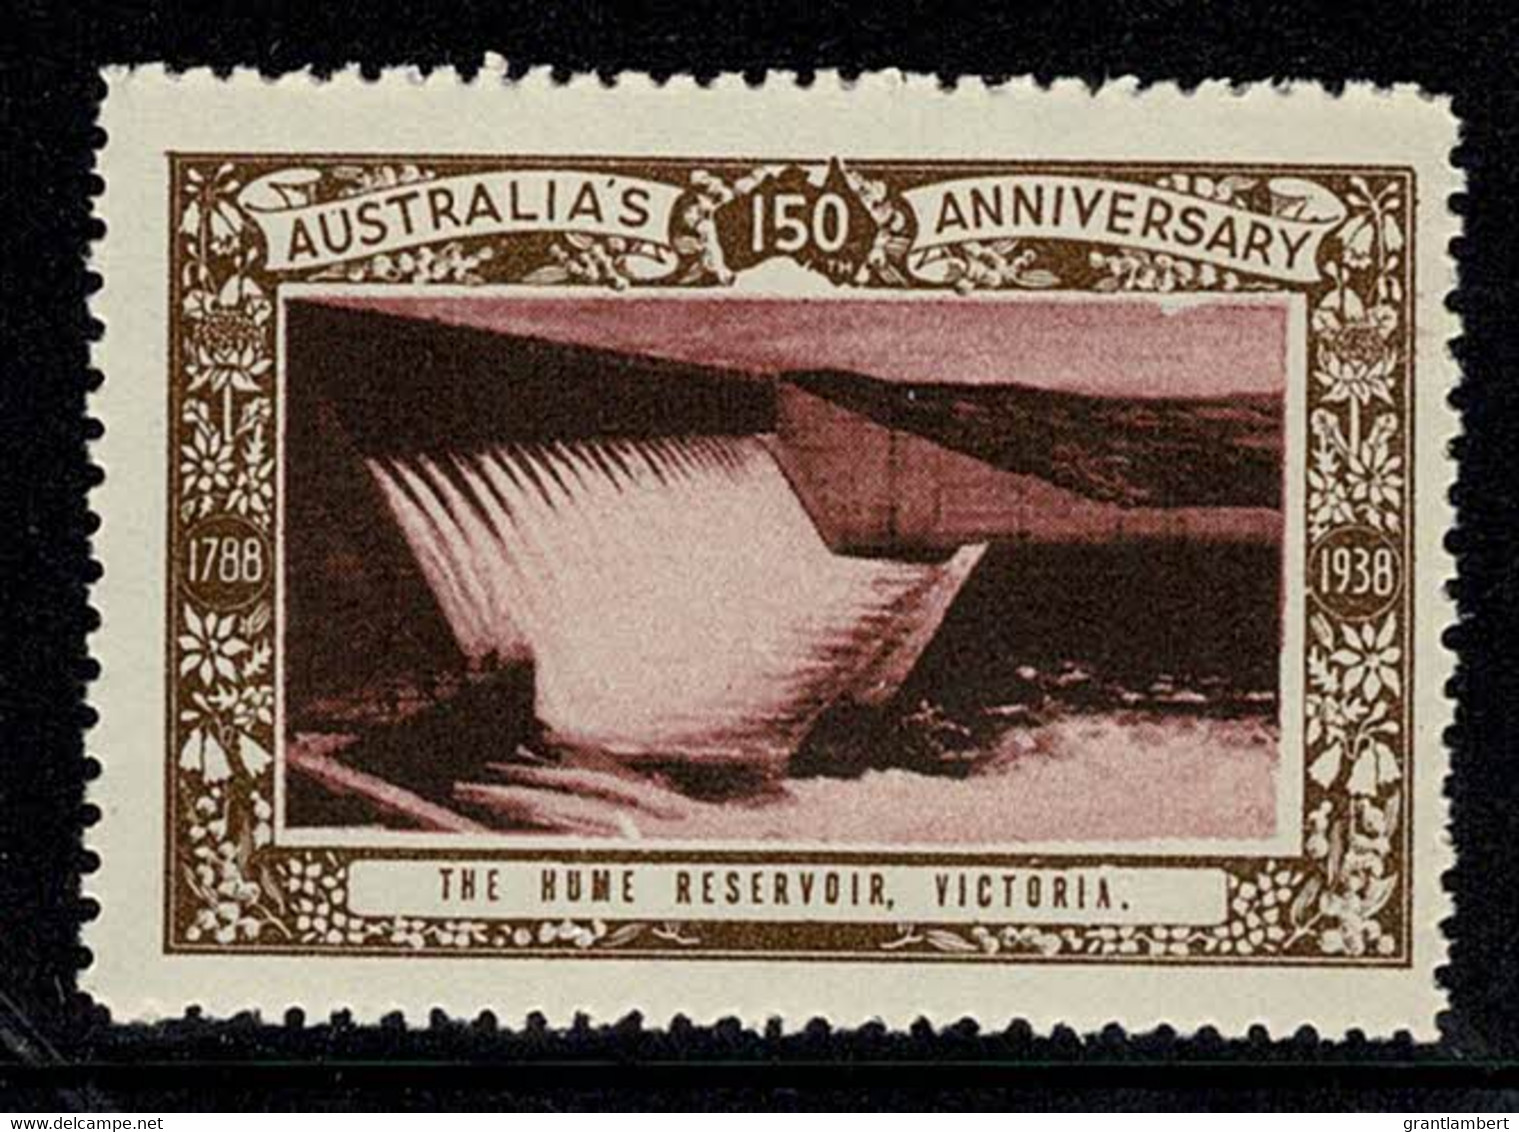 Australia 1938 The Hume Reservoir, Victoria - NSW 150th Anniversary Cinderella MNH - Cinderellas